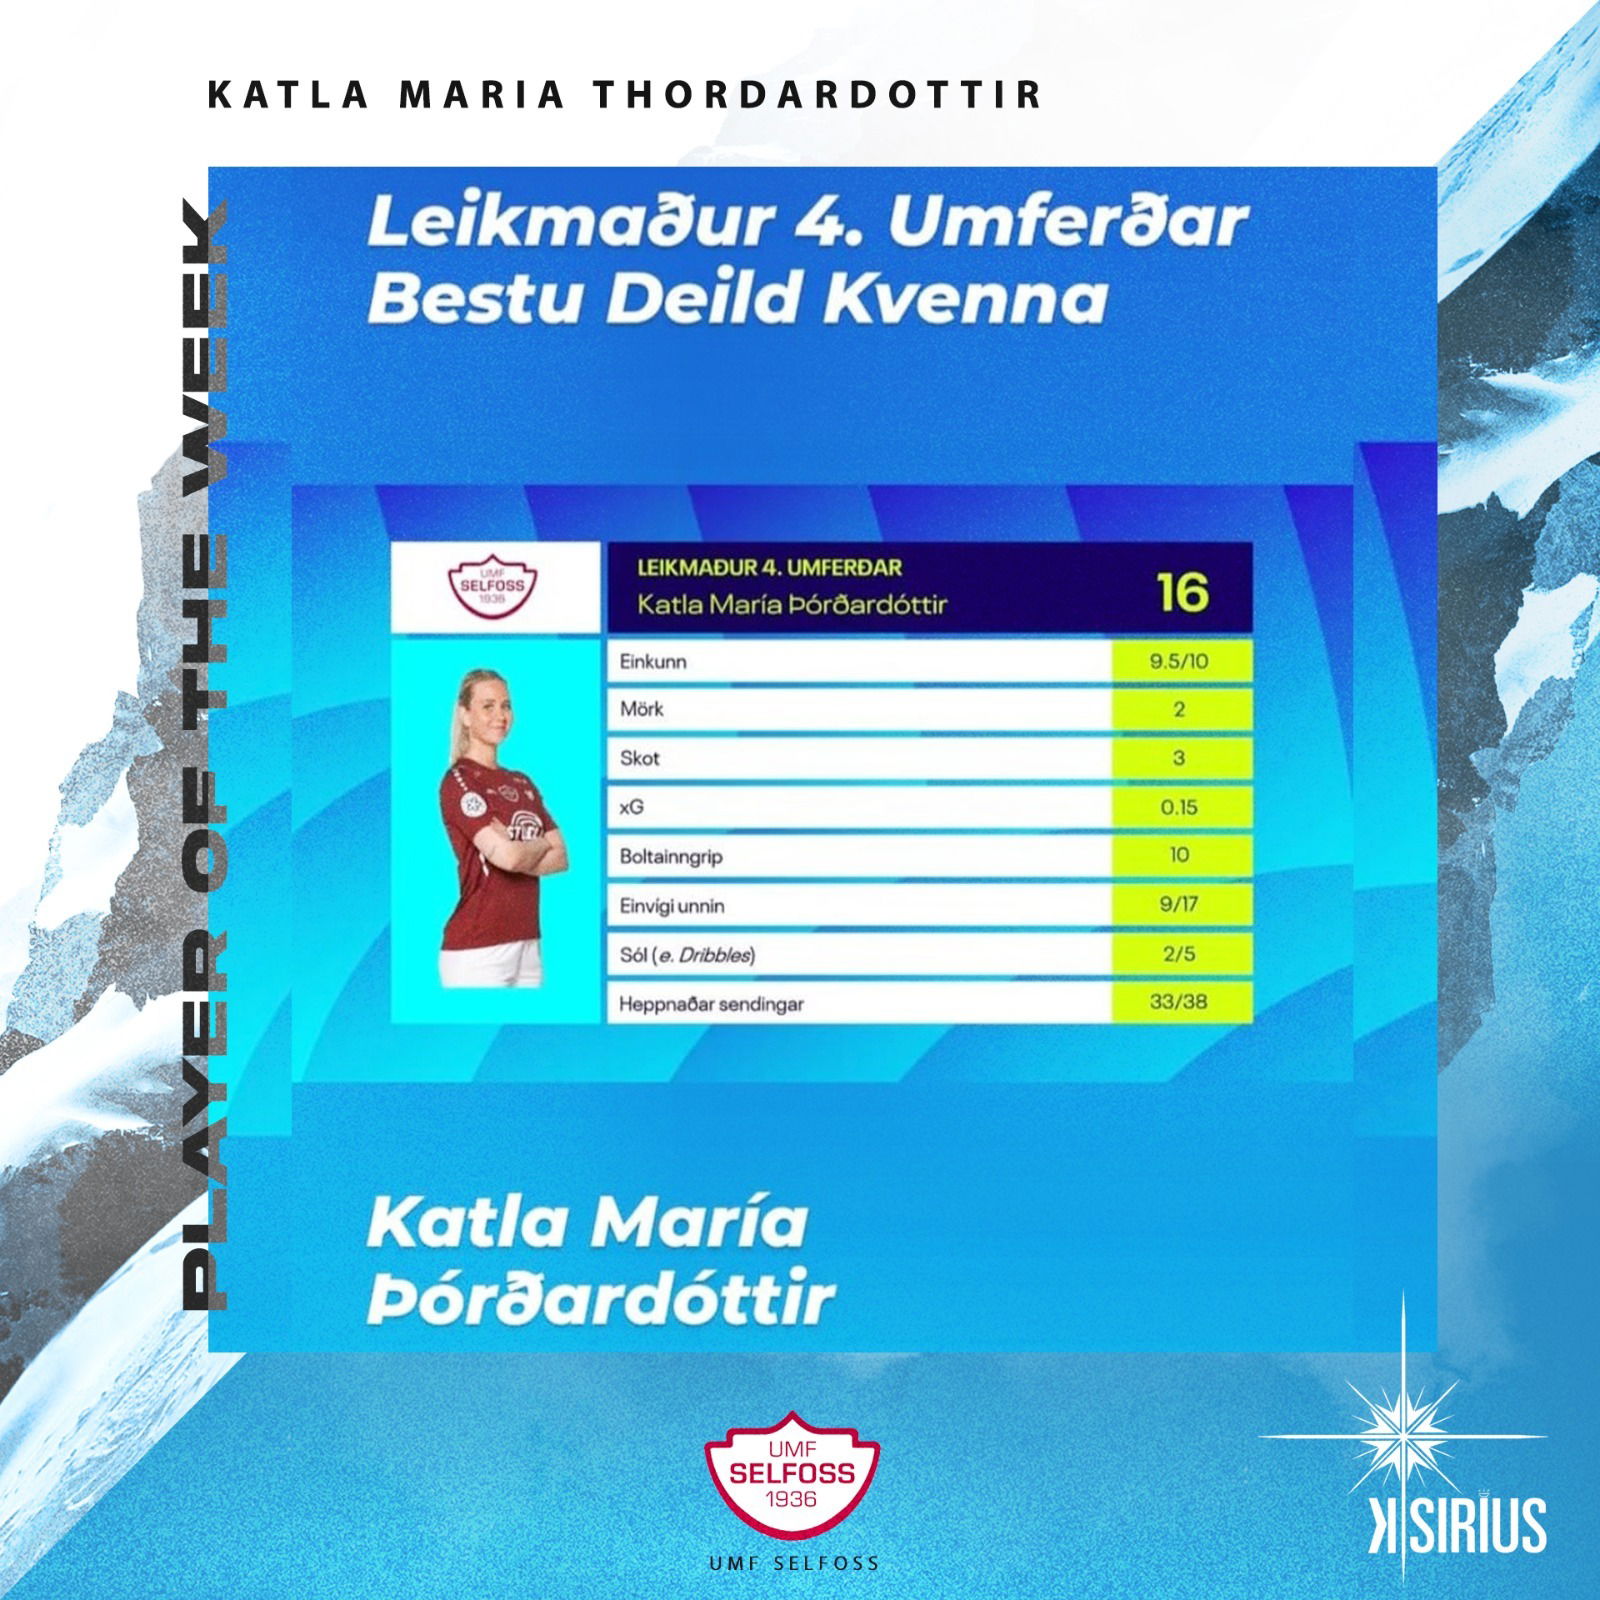 Player of the Week: Katla Maria Thordardottir (UMF Selfoss)